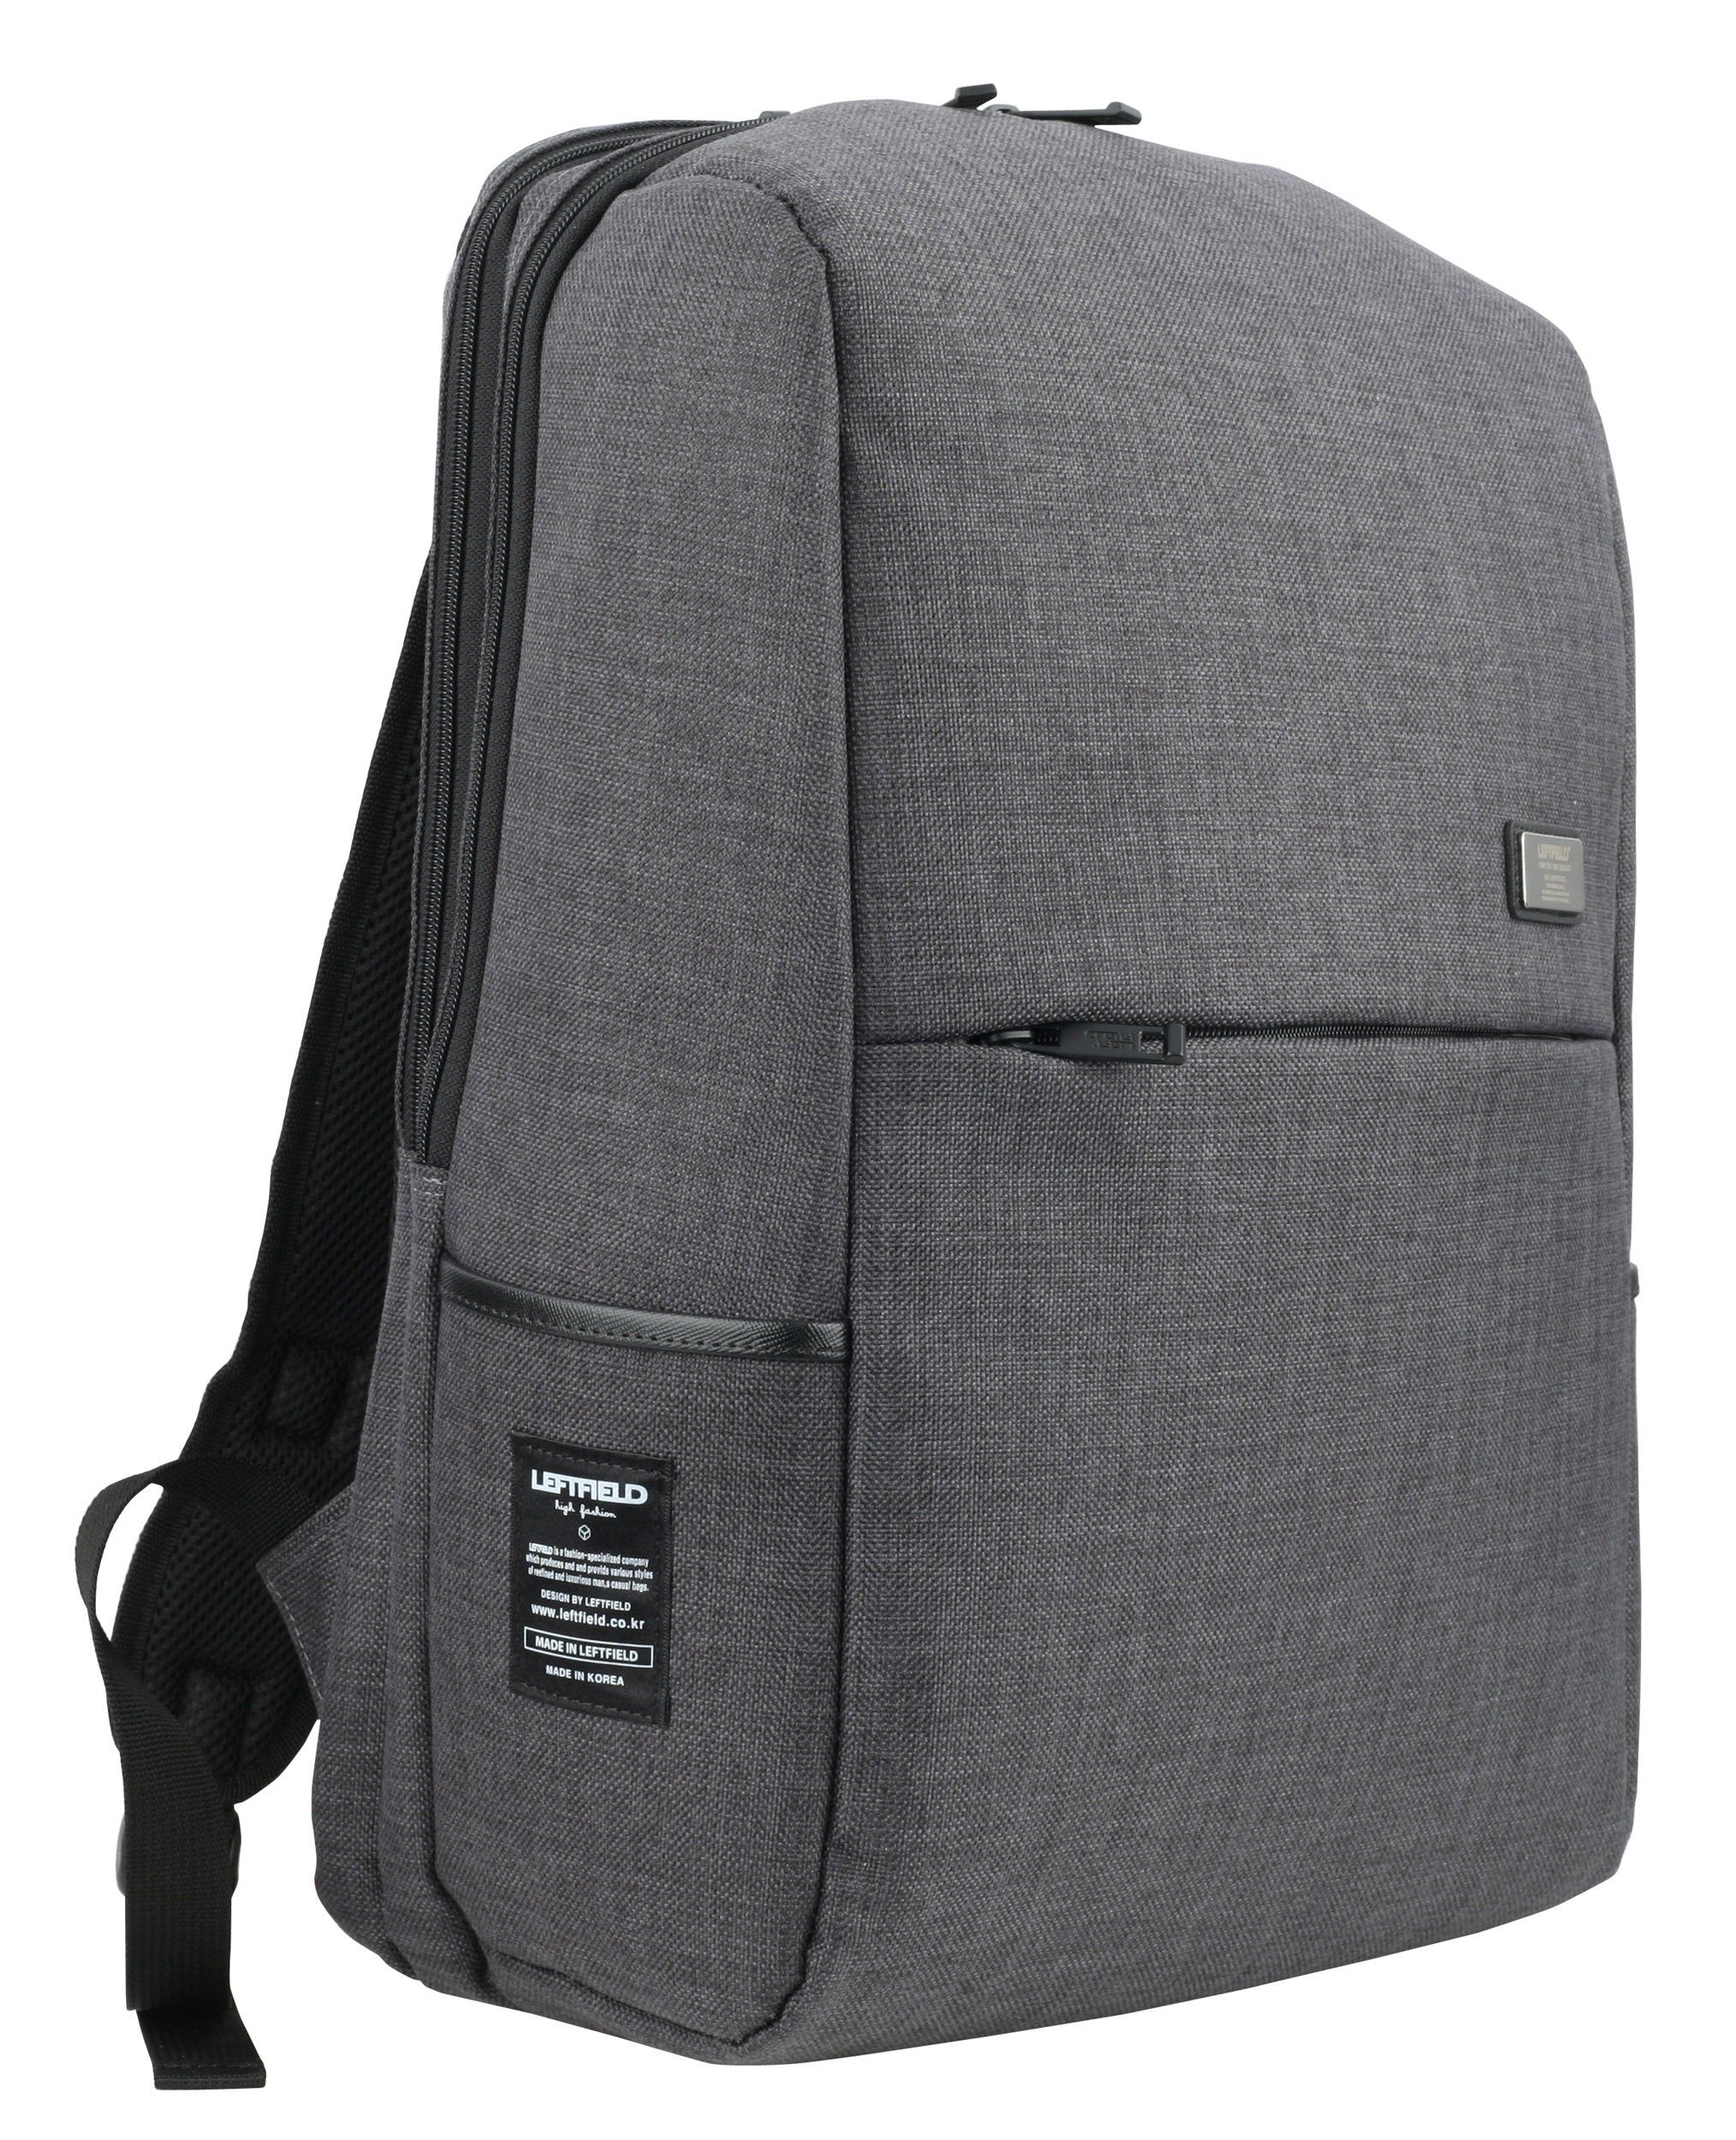 Black Canvas Laptop Backpacks